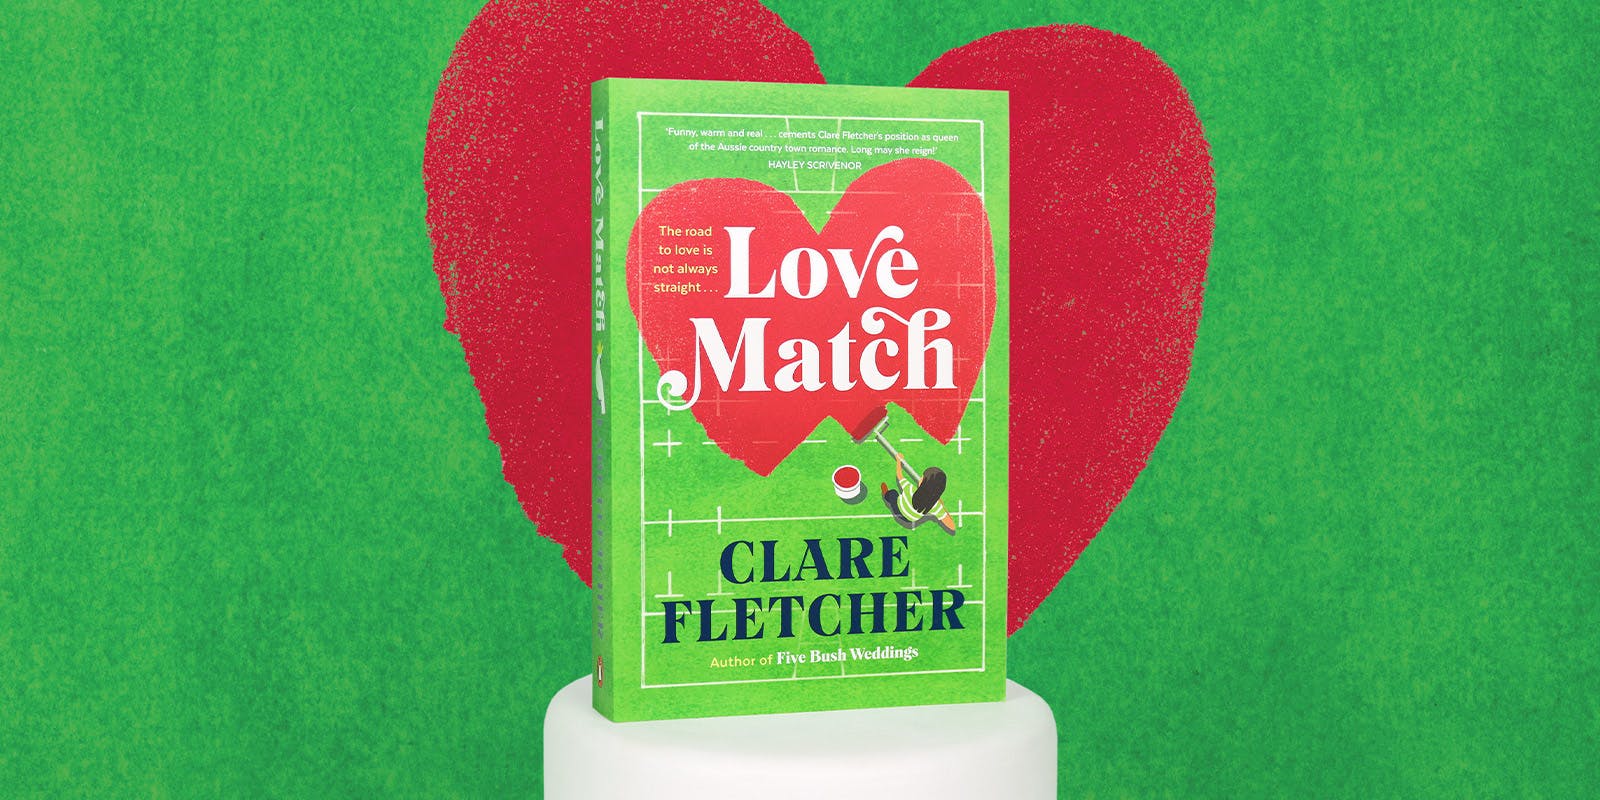 Love Match book club questions